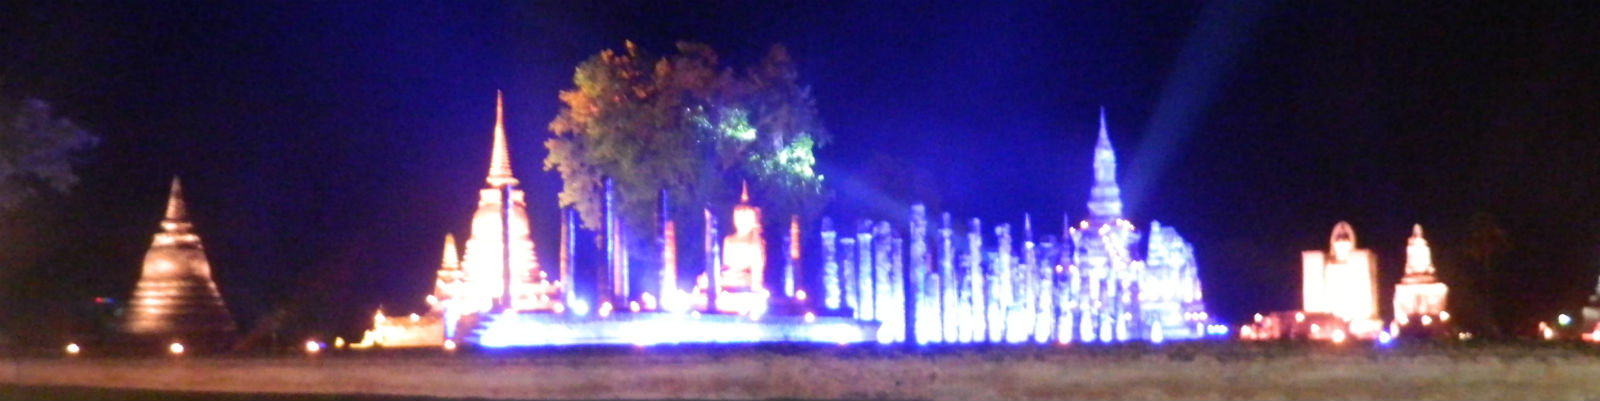 Festival of Light at Sukhothai Historic Park, Sukhothai Province